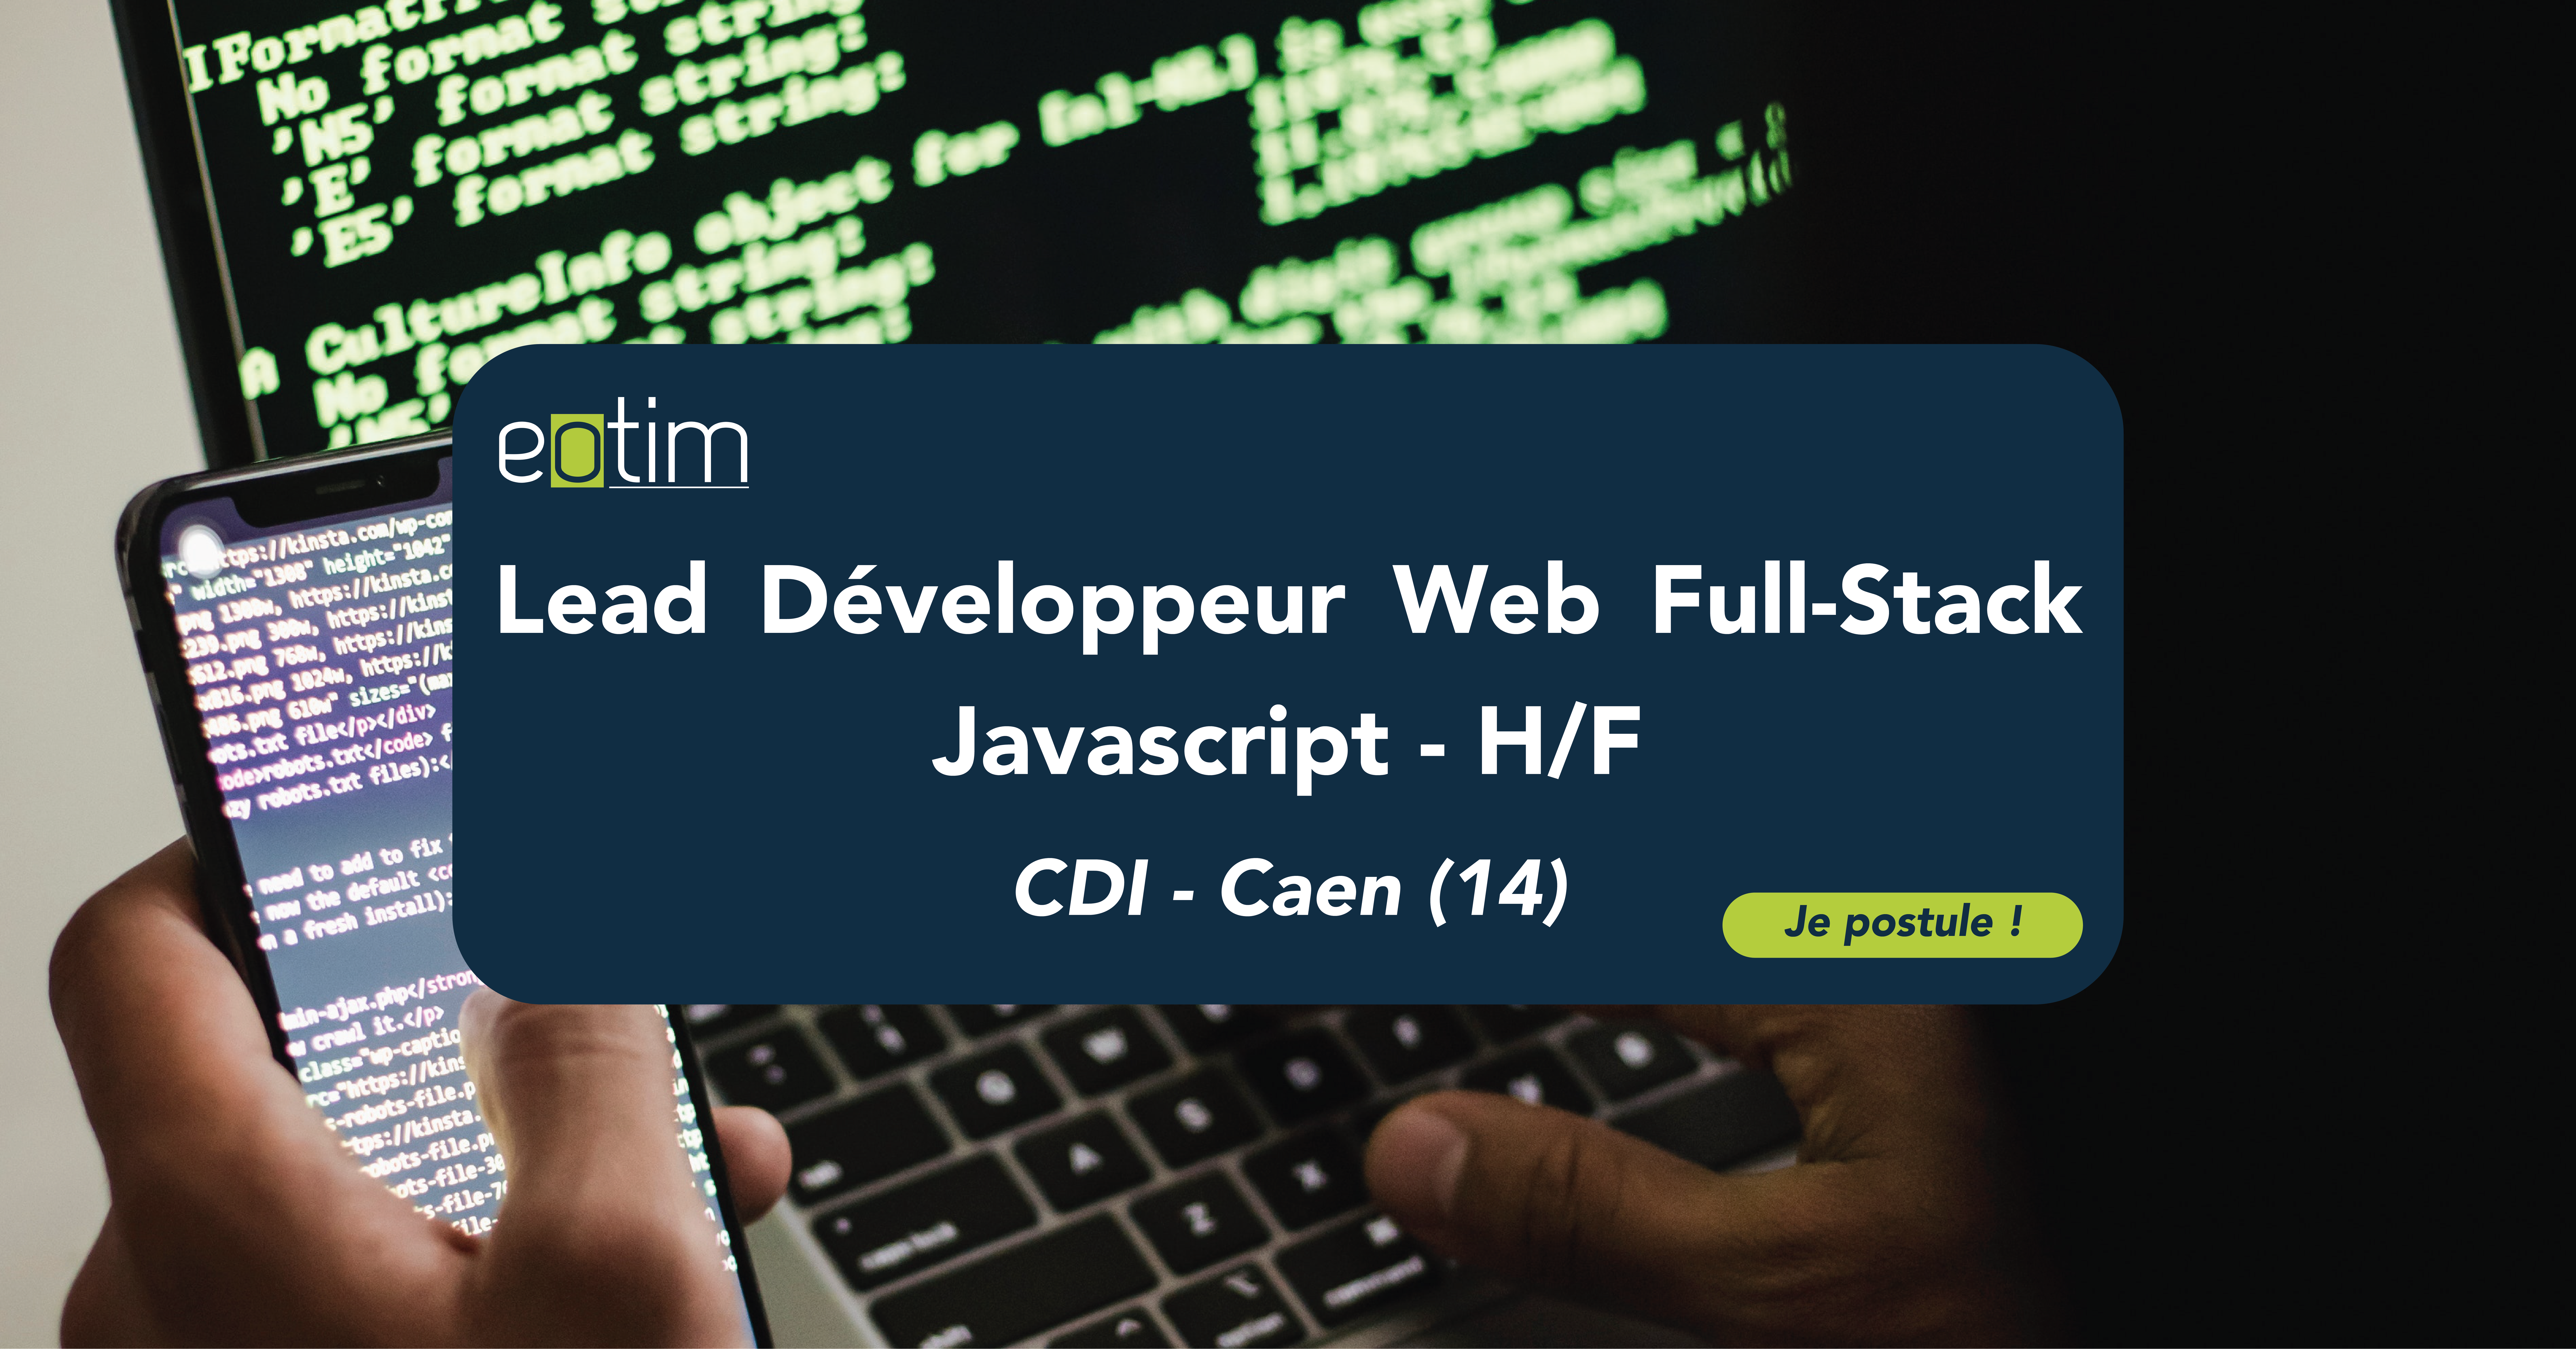 Lead Developer web full-stack JavaScript H/F